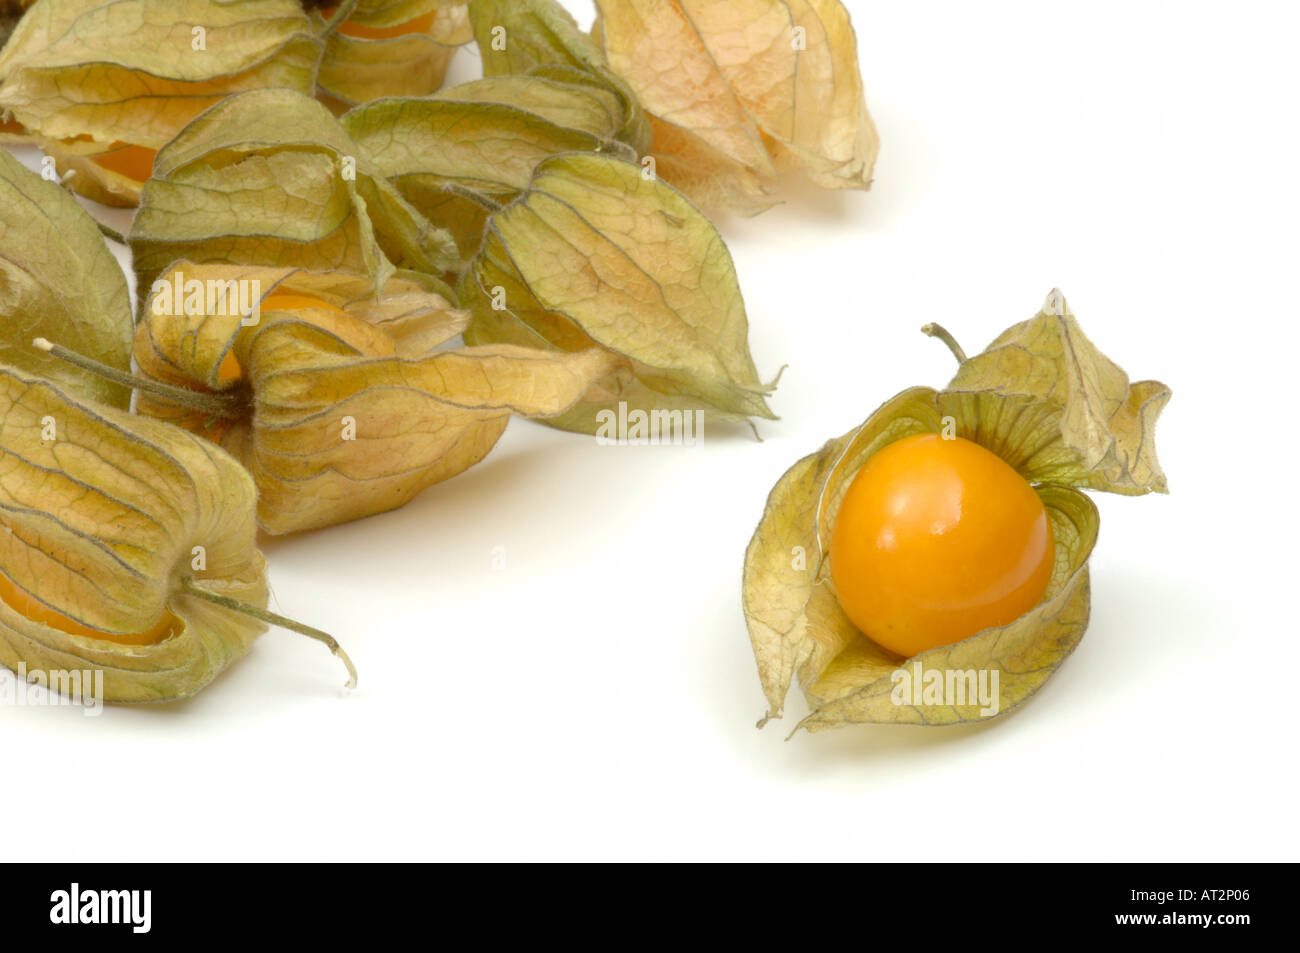 Physalis o groundcherry frutto su sfondo bianco Foto Stock